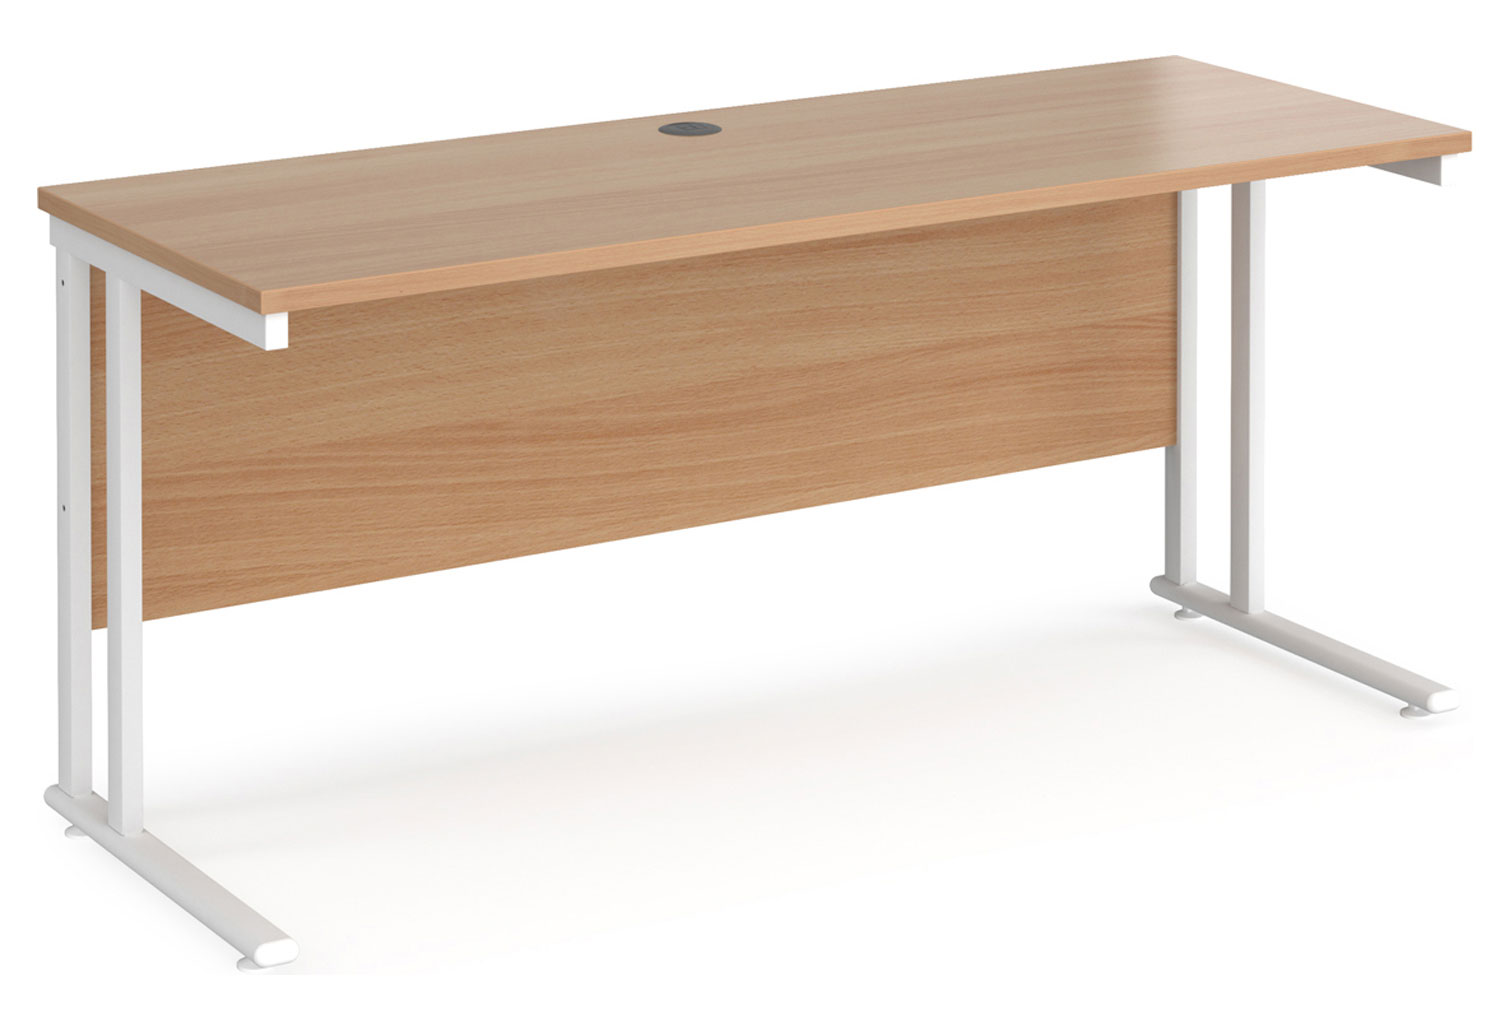 Value Line Deluxe C-Leg Narrow Rectangular Office Desk (White Legs), 160w60dx73h (cm), Beech, Express Delivery